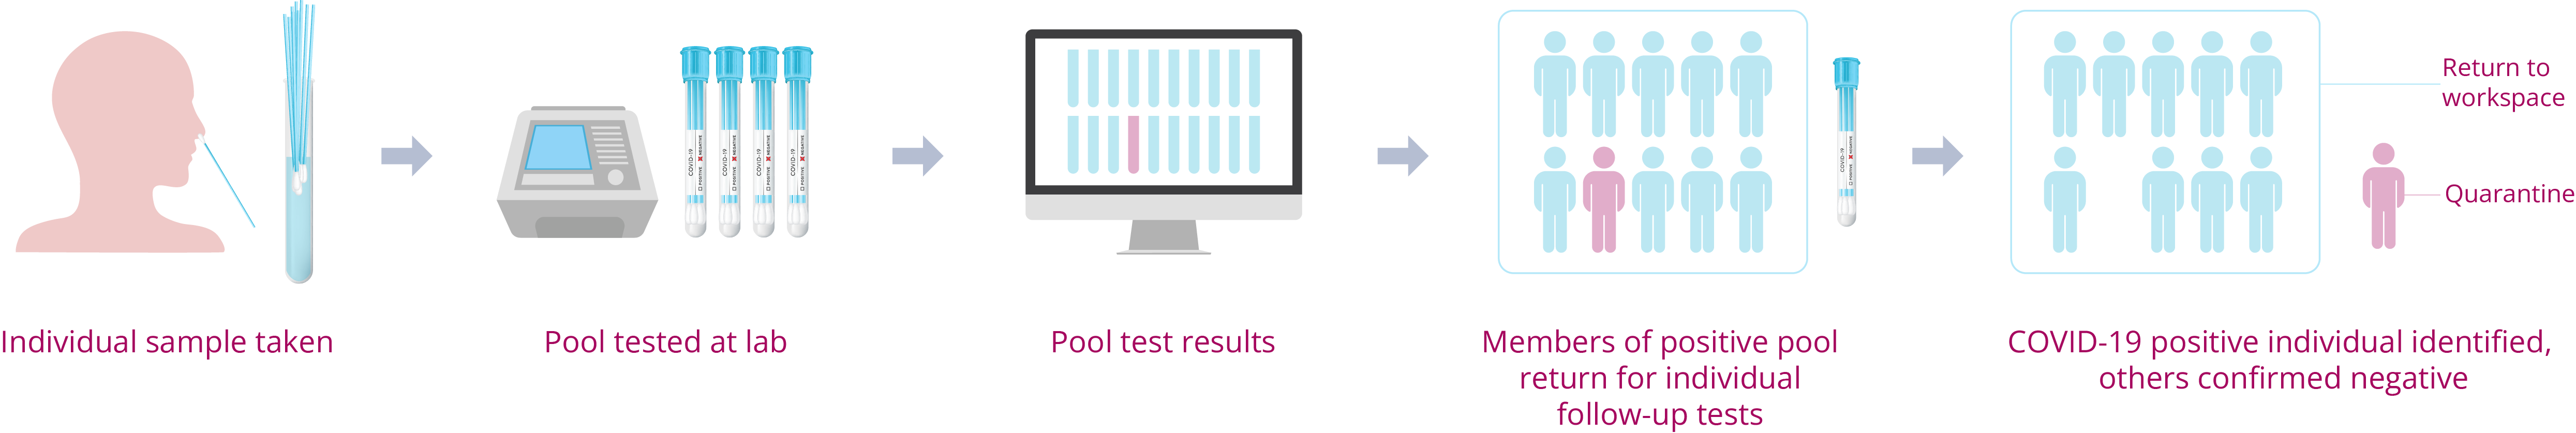 Nexsunlabs Covid-19 Pool Test Process Explanation